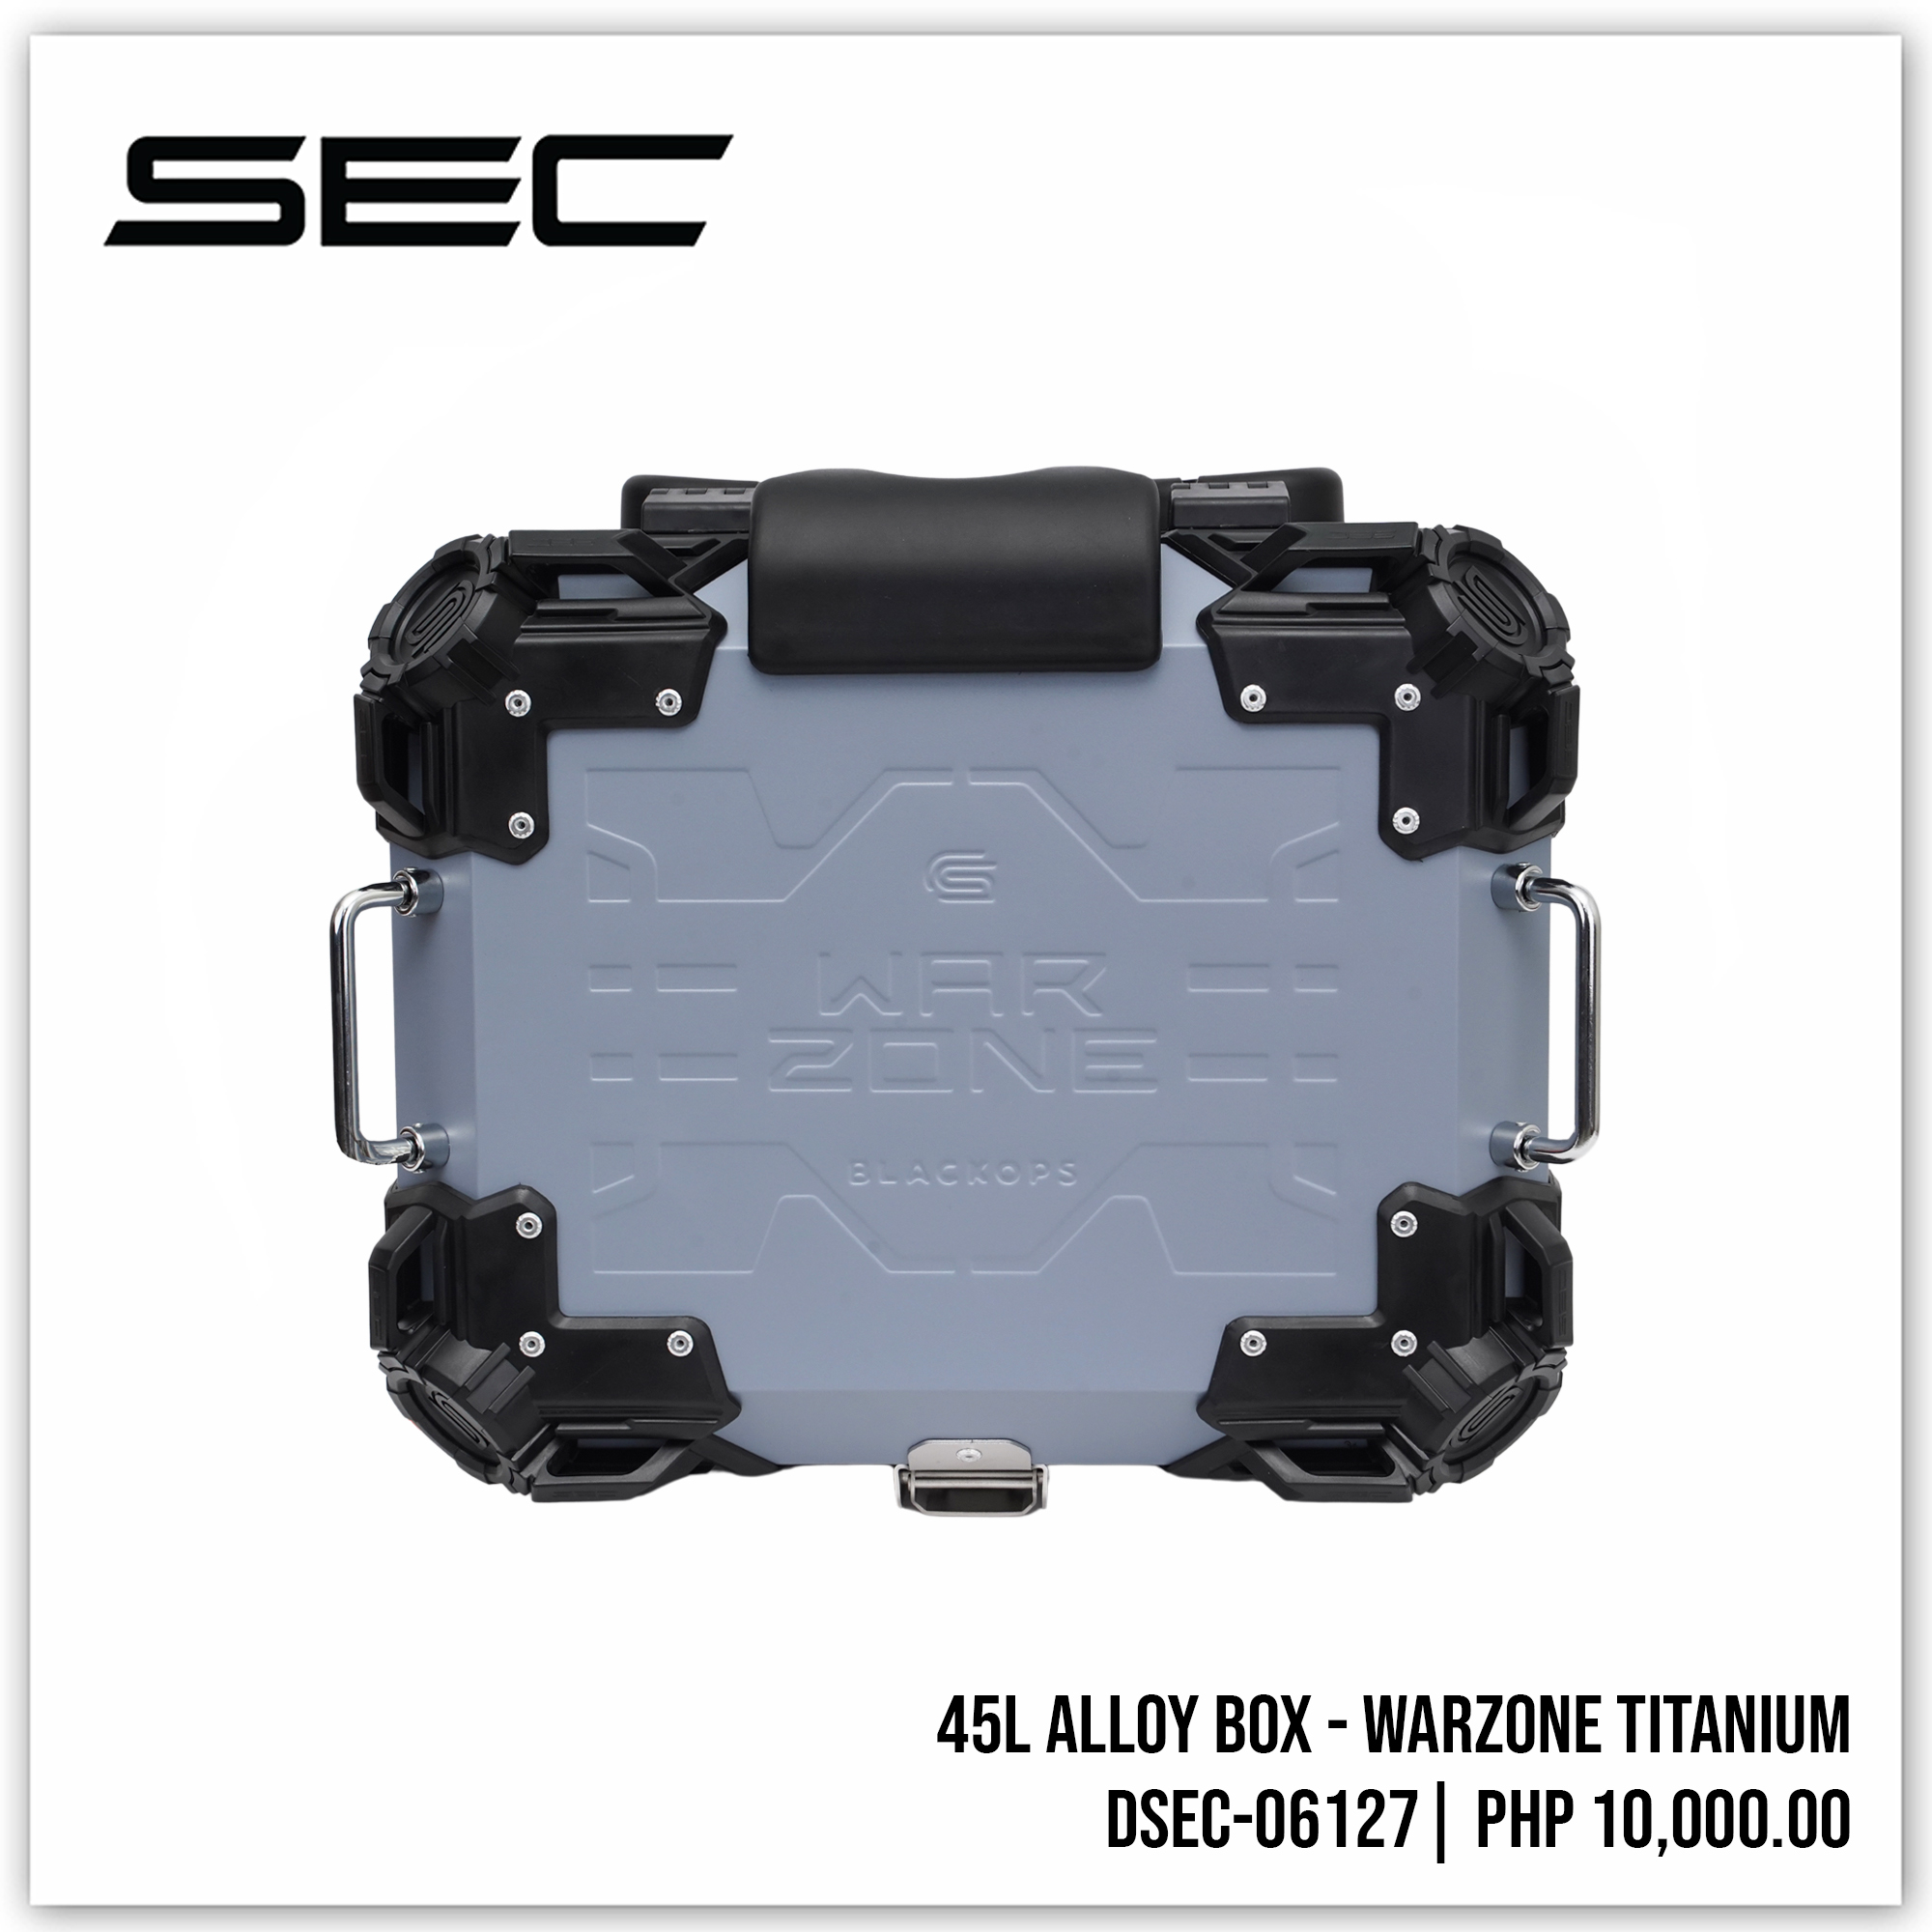 DSEC-06127 I 45L Alloy Box Warzone Titanium | Shopee Philippines